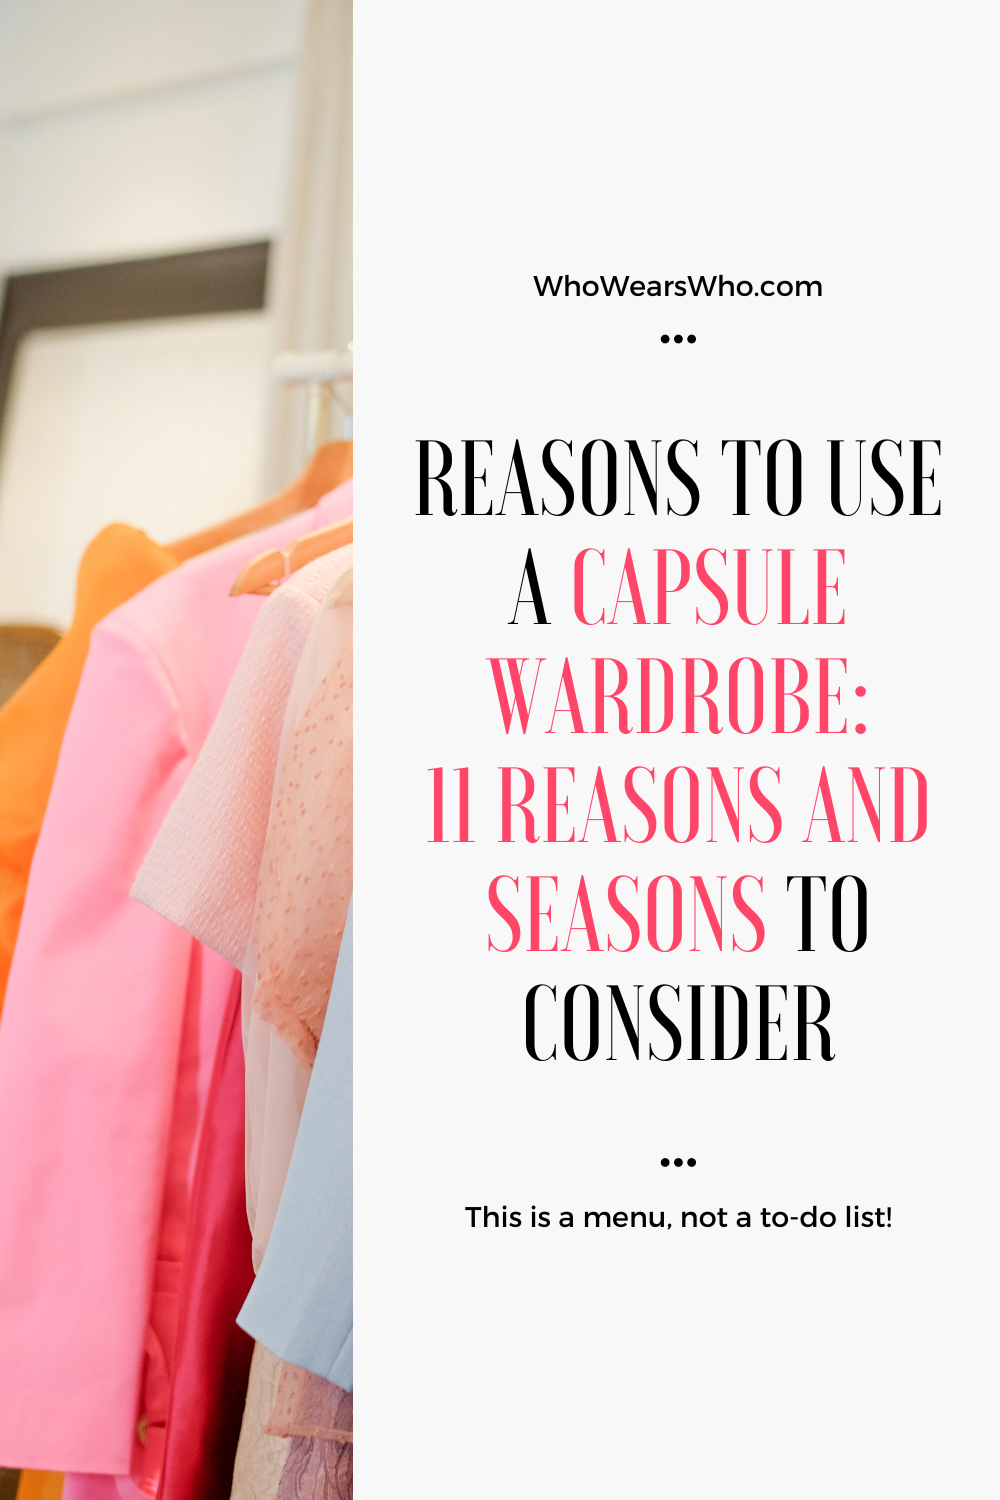 Reasons to use a capsule wardrobe